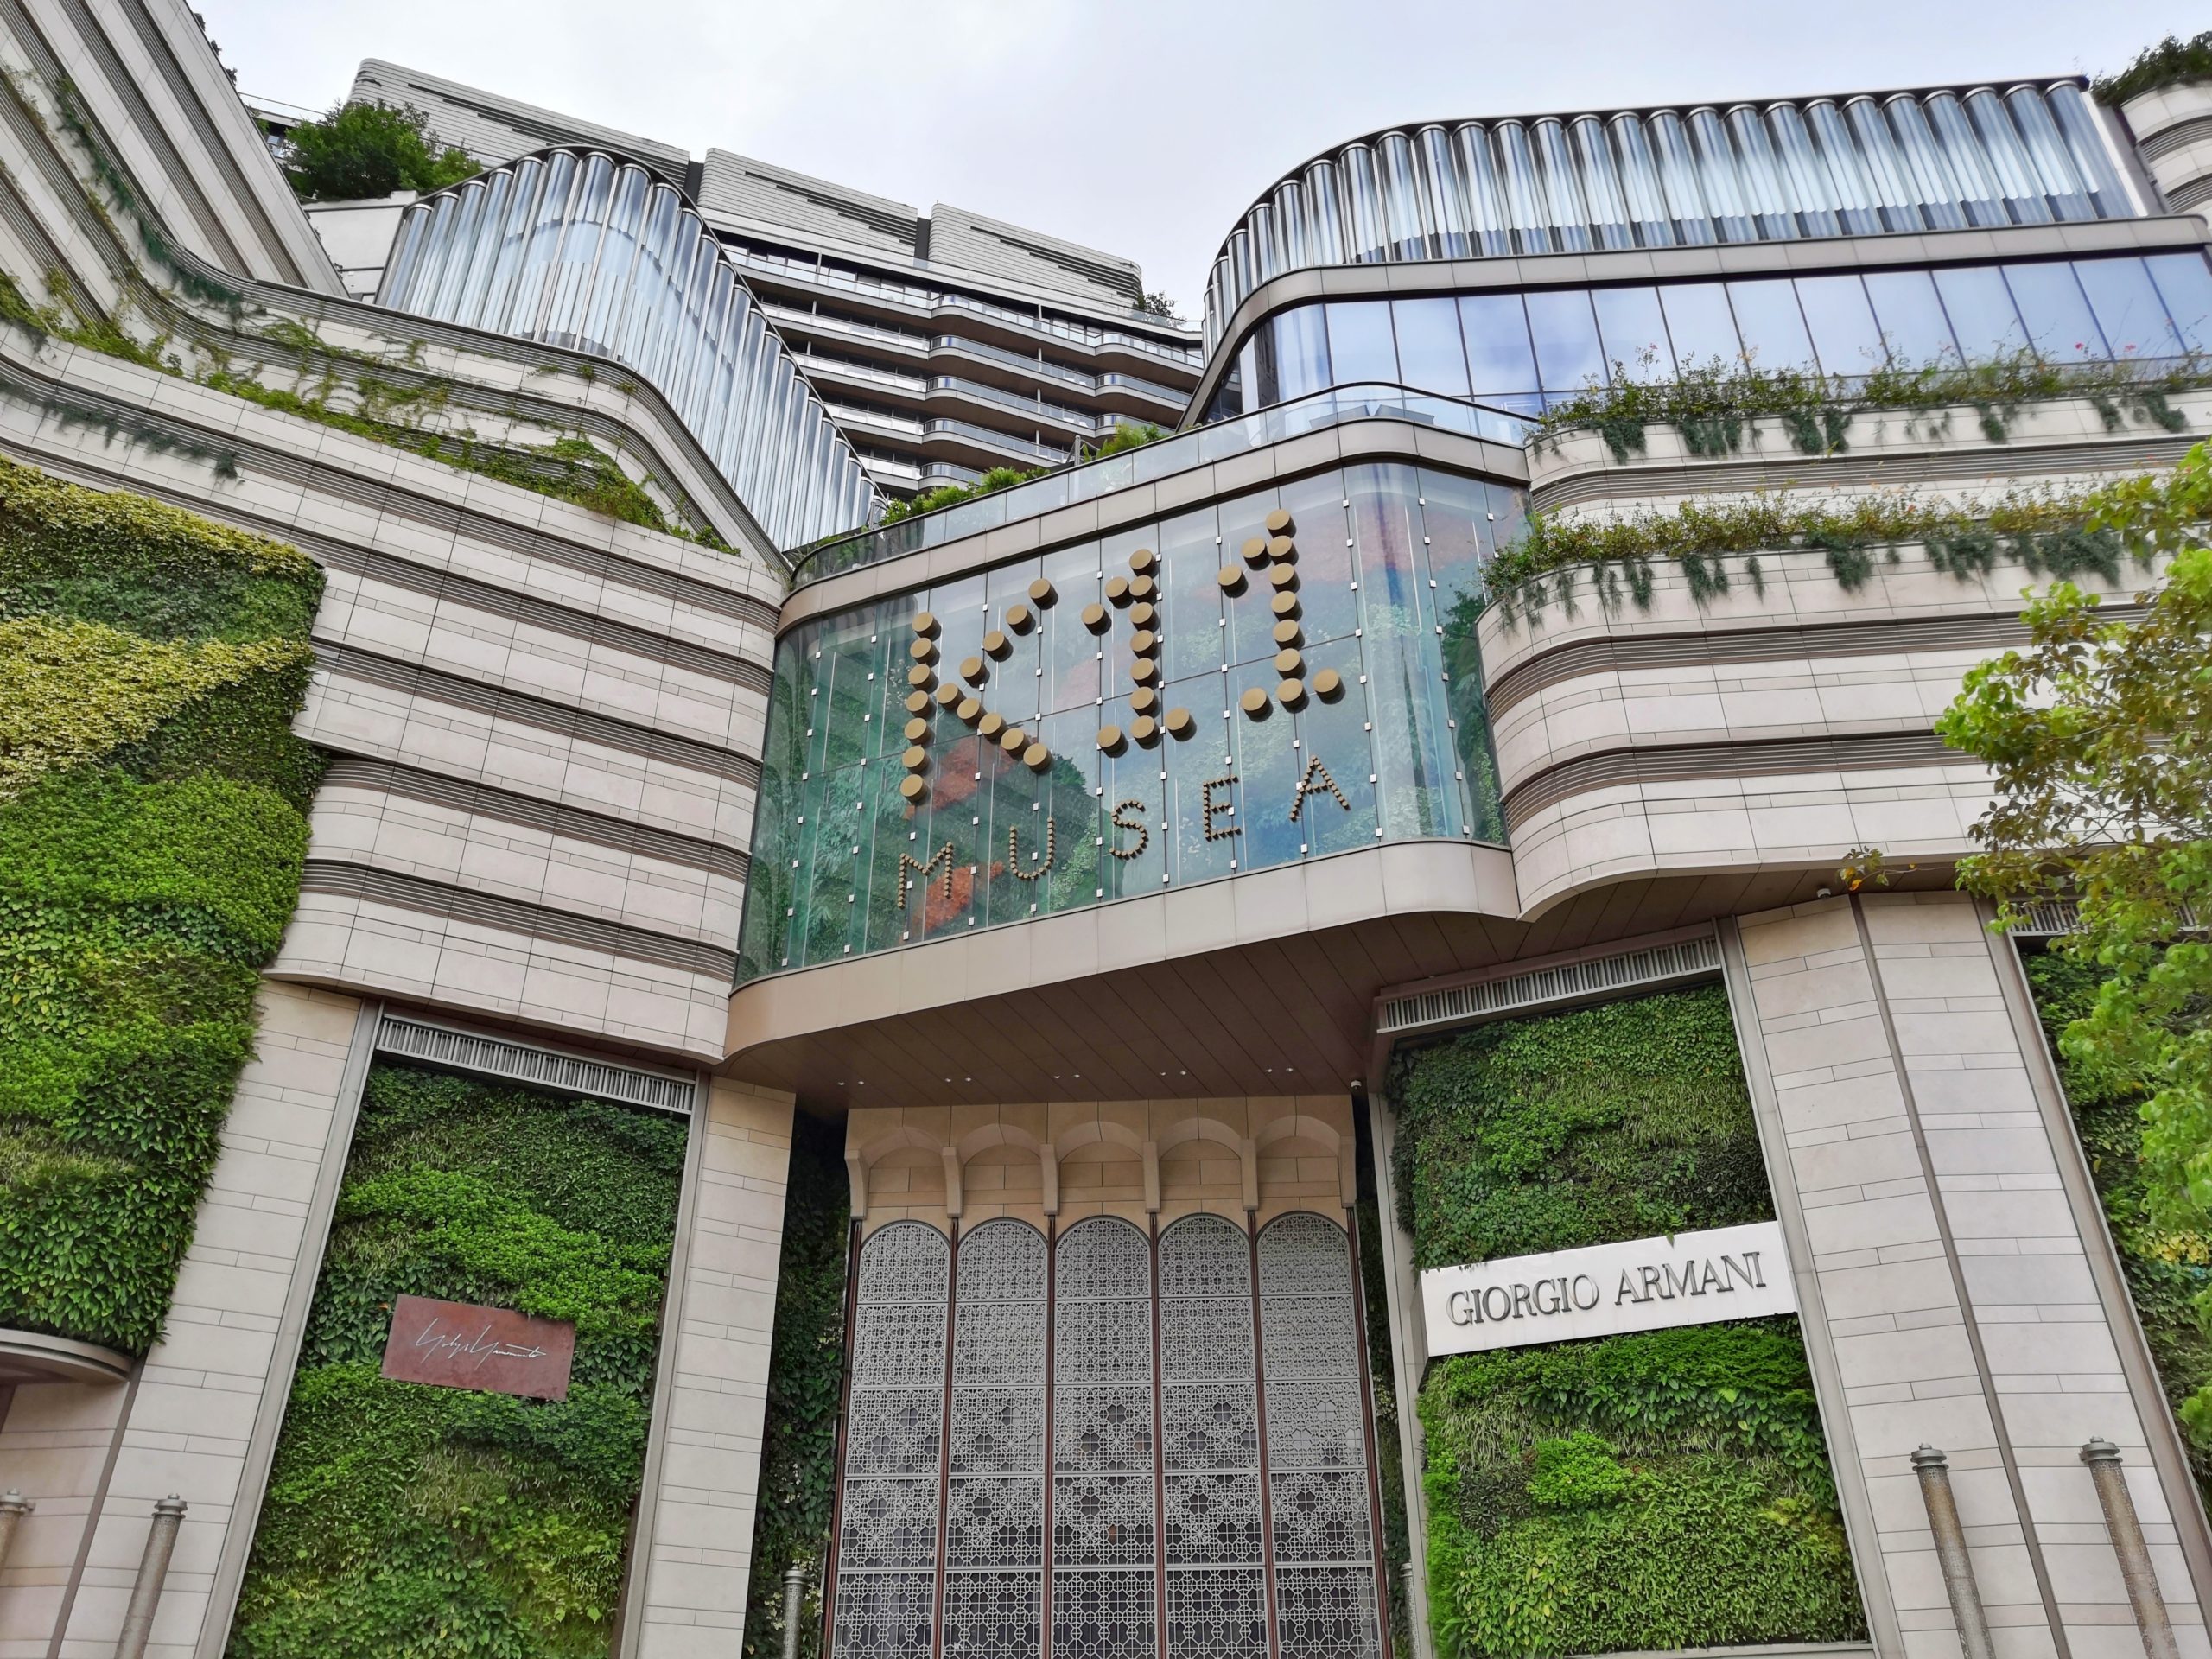 K11 Musea Shopping Mall Hong Kong Wonderful Experience